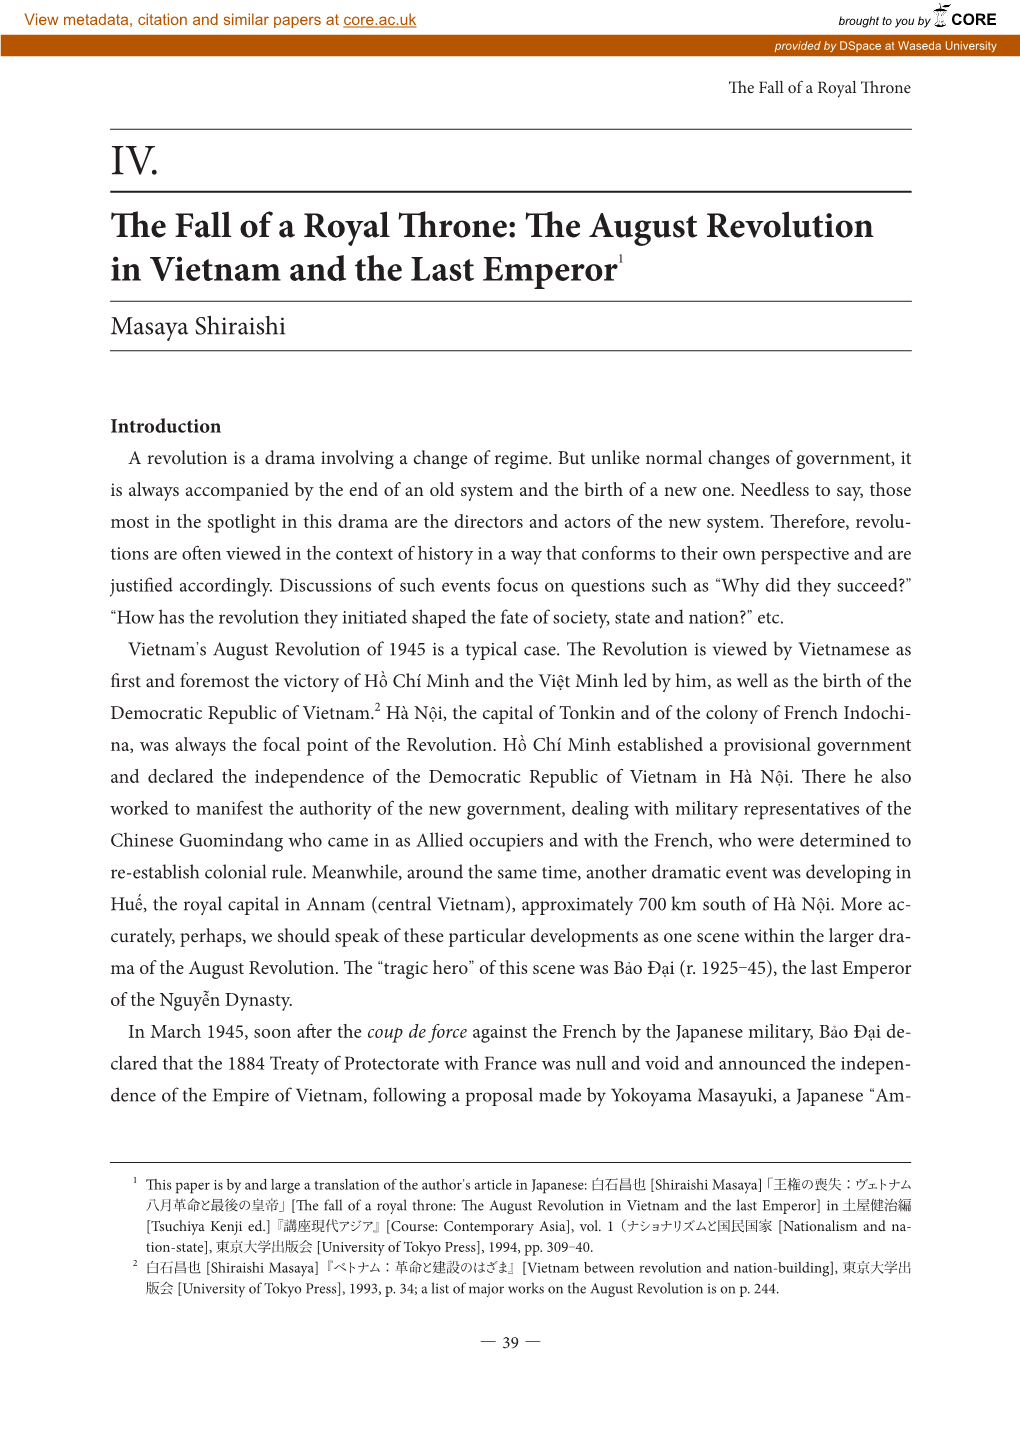 E August Revolution in Vietnam and the Last Emperor1 Masaya Shiraishi